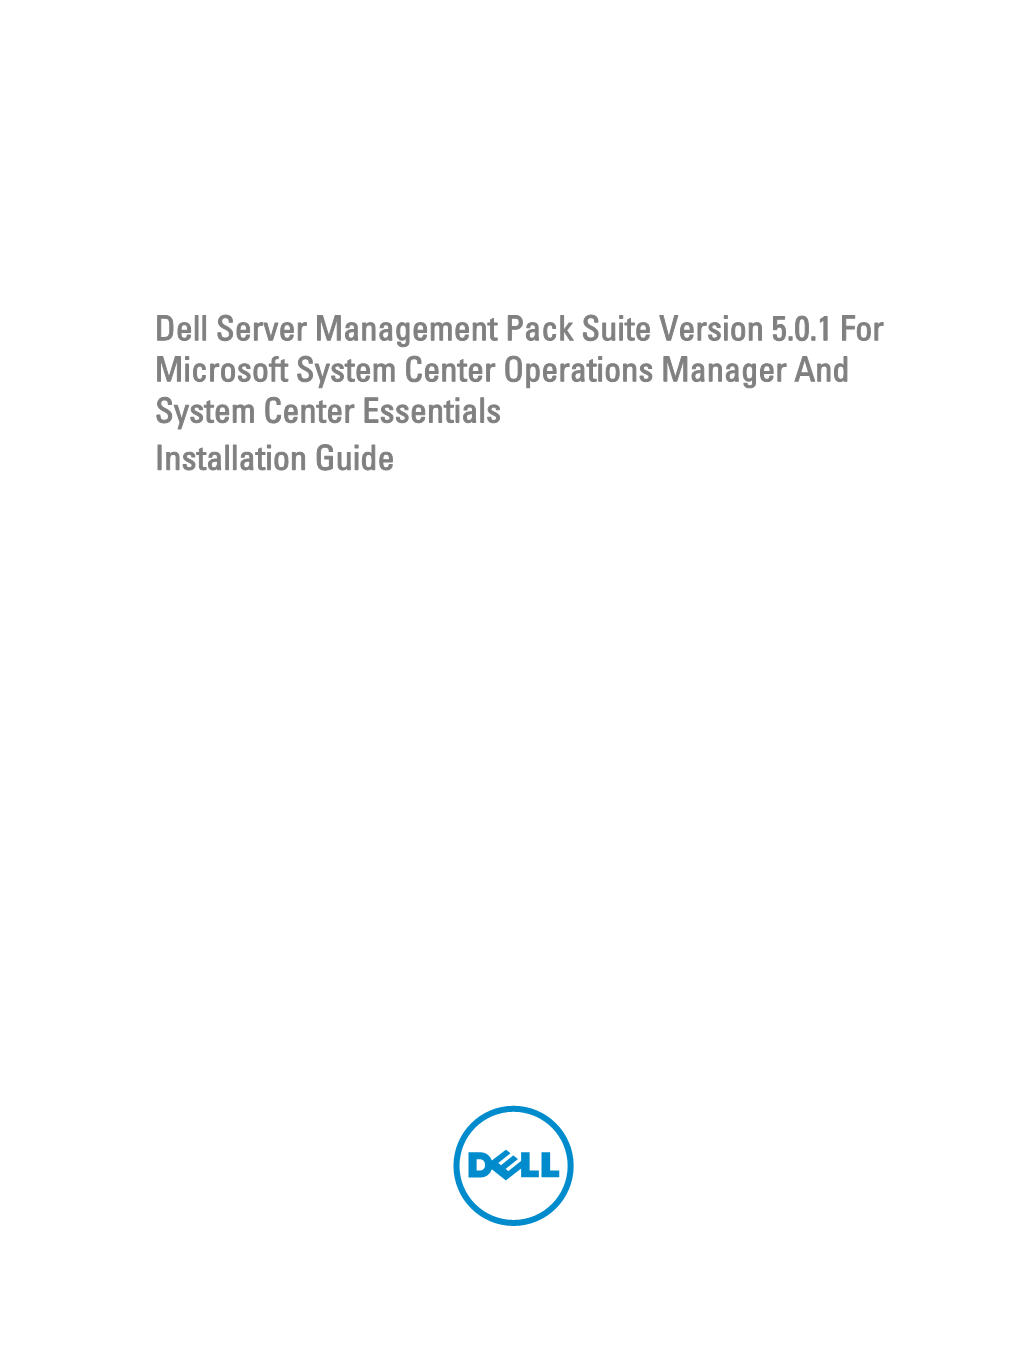 Dell Server Management Pack Suite Version 5.0.1 for Microsoft